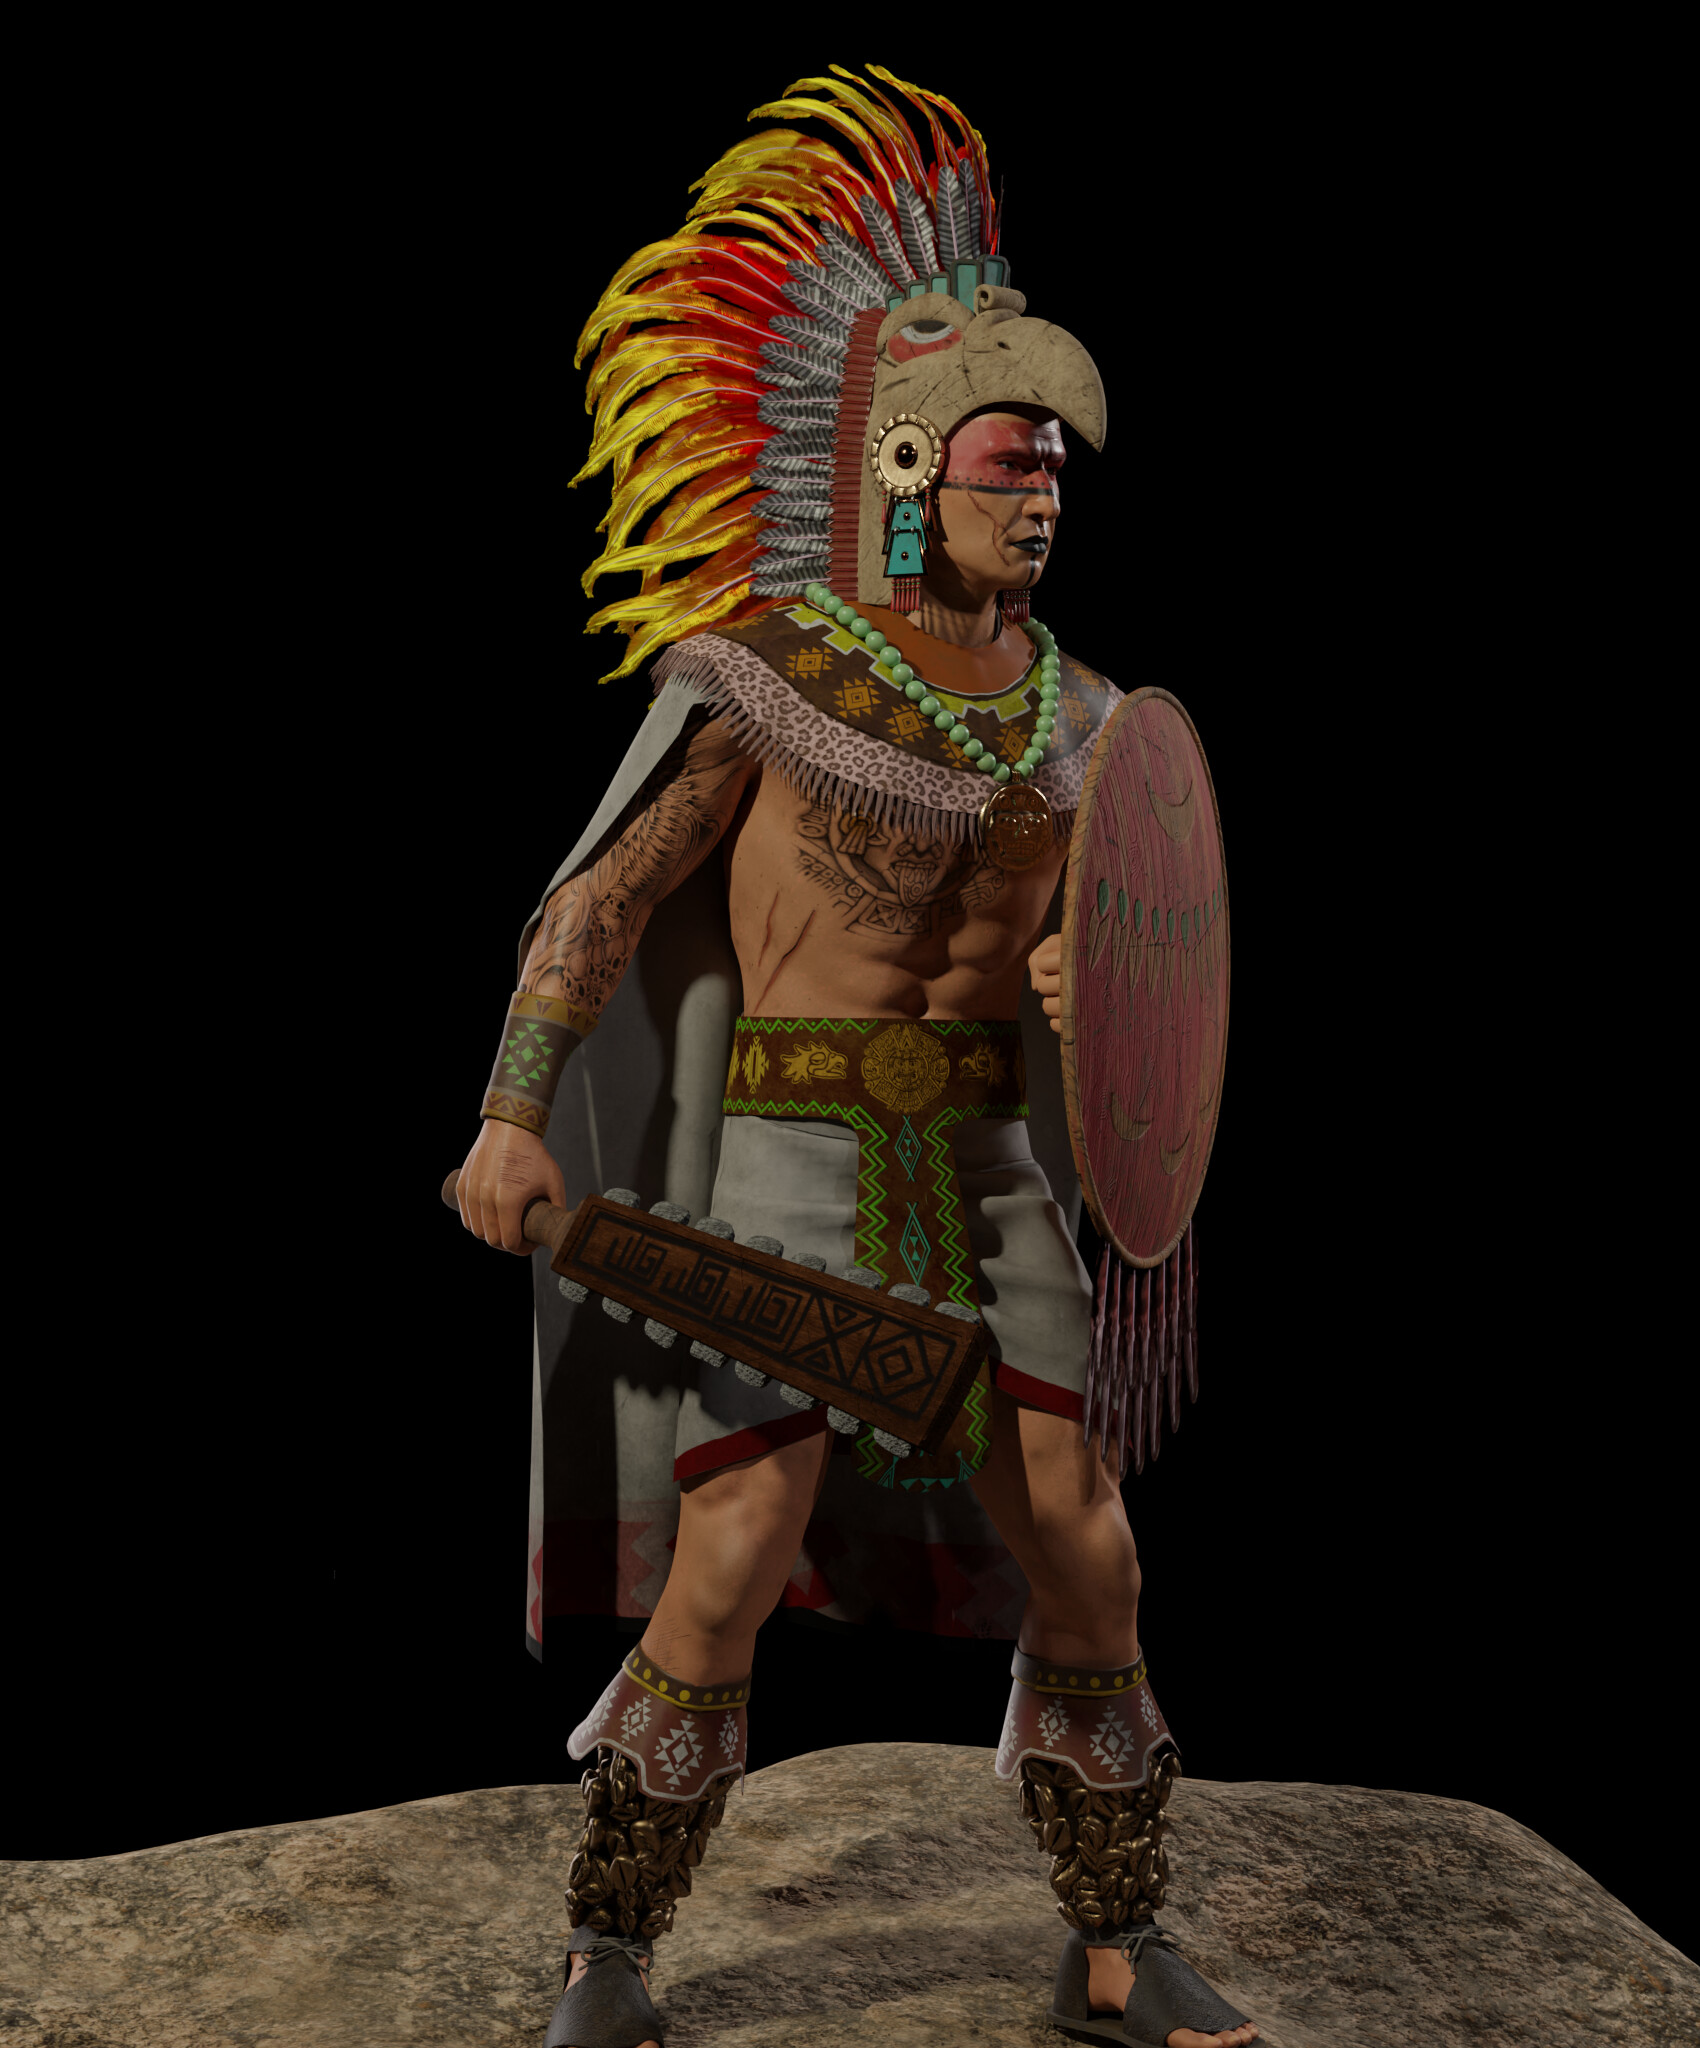 ArtStation - Aztec eagle warrior